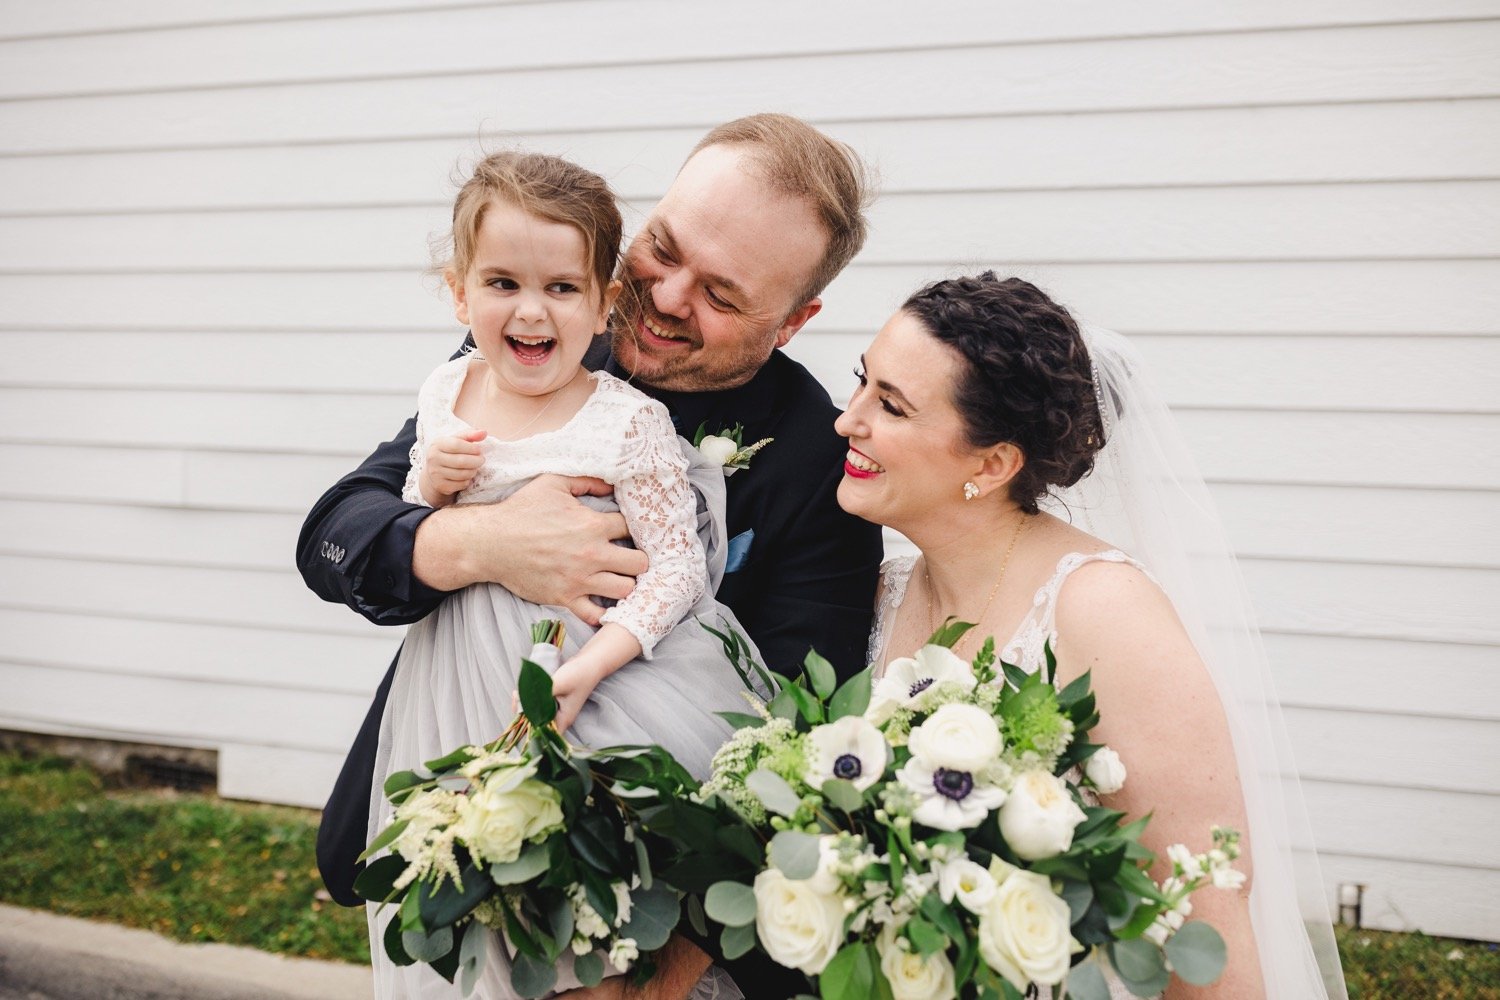 111_Skeens-198_Kelsey-Diane-Photography-Best-of-2021-Kansas-City-Missouri-Photographer-Wedding-Family-Engagement-Newborn-Maternity.jpg